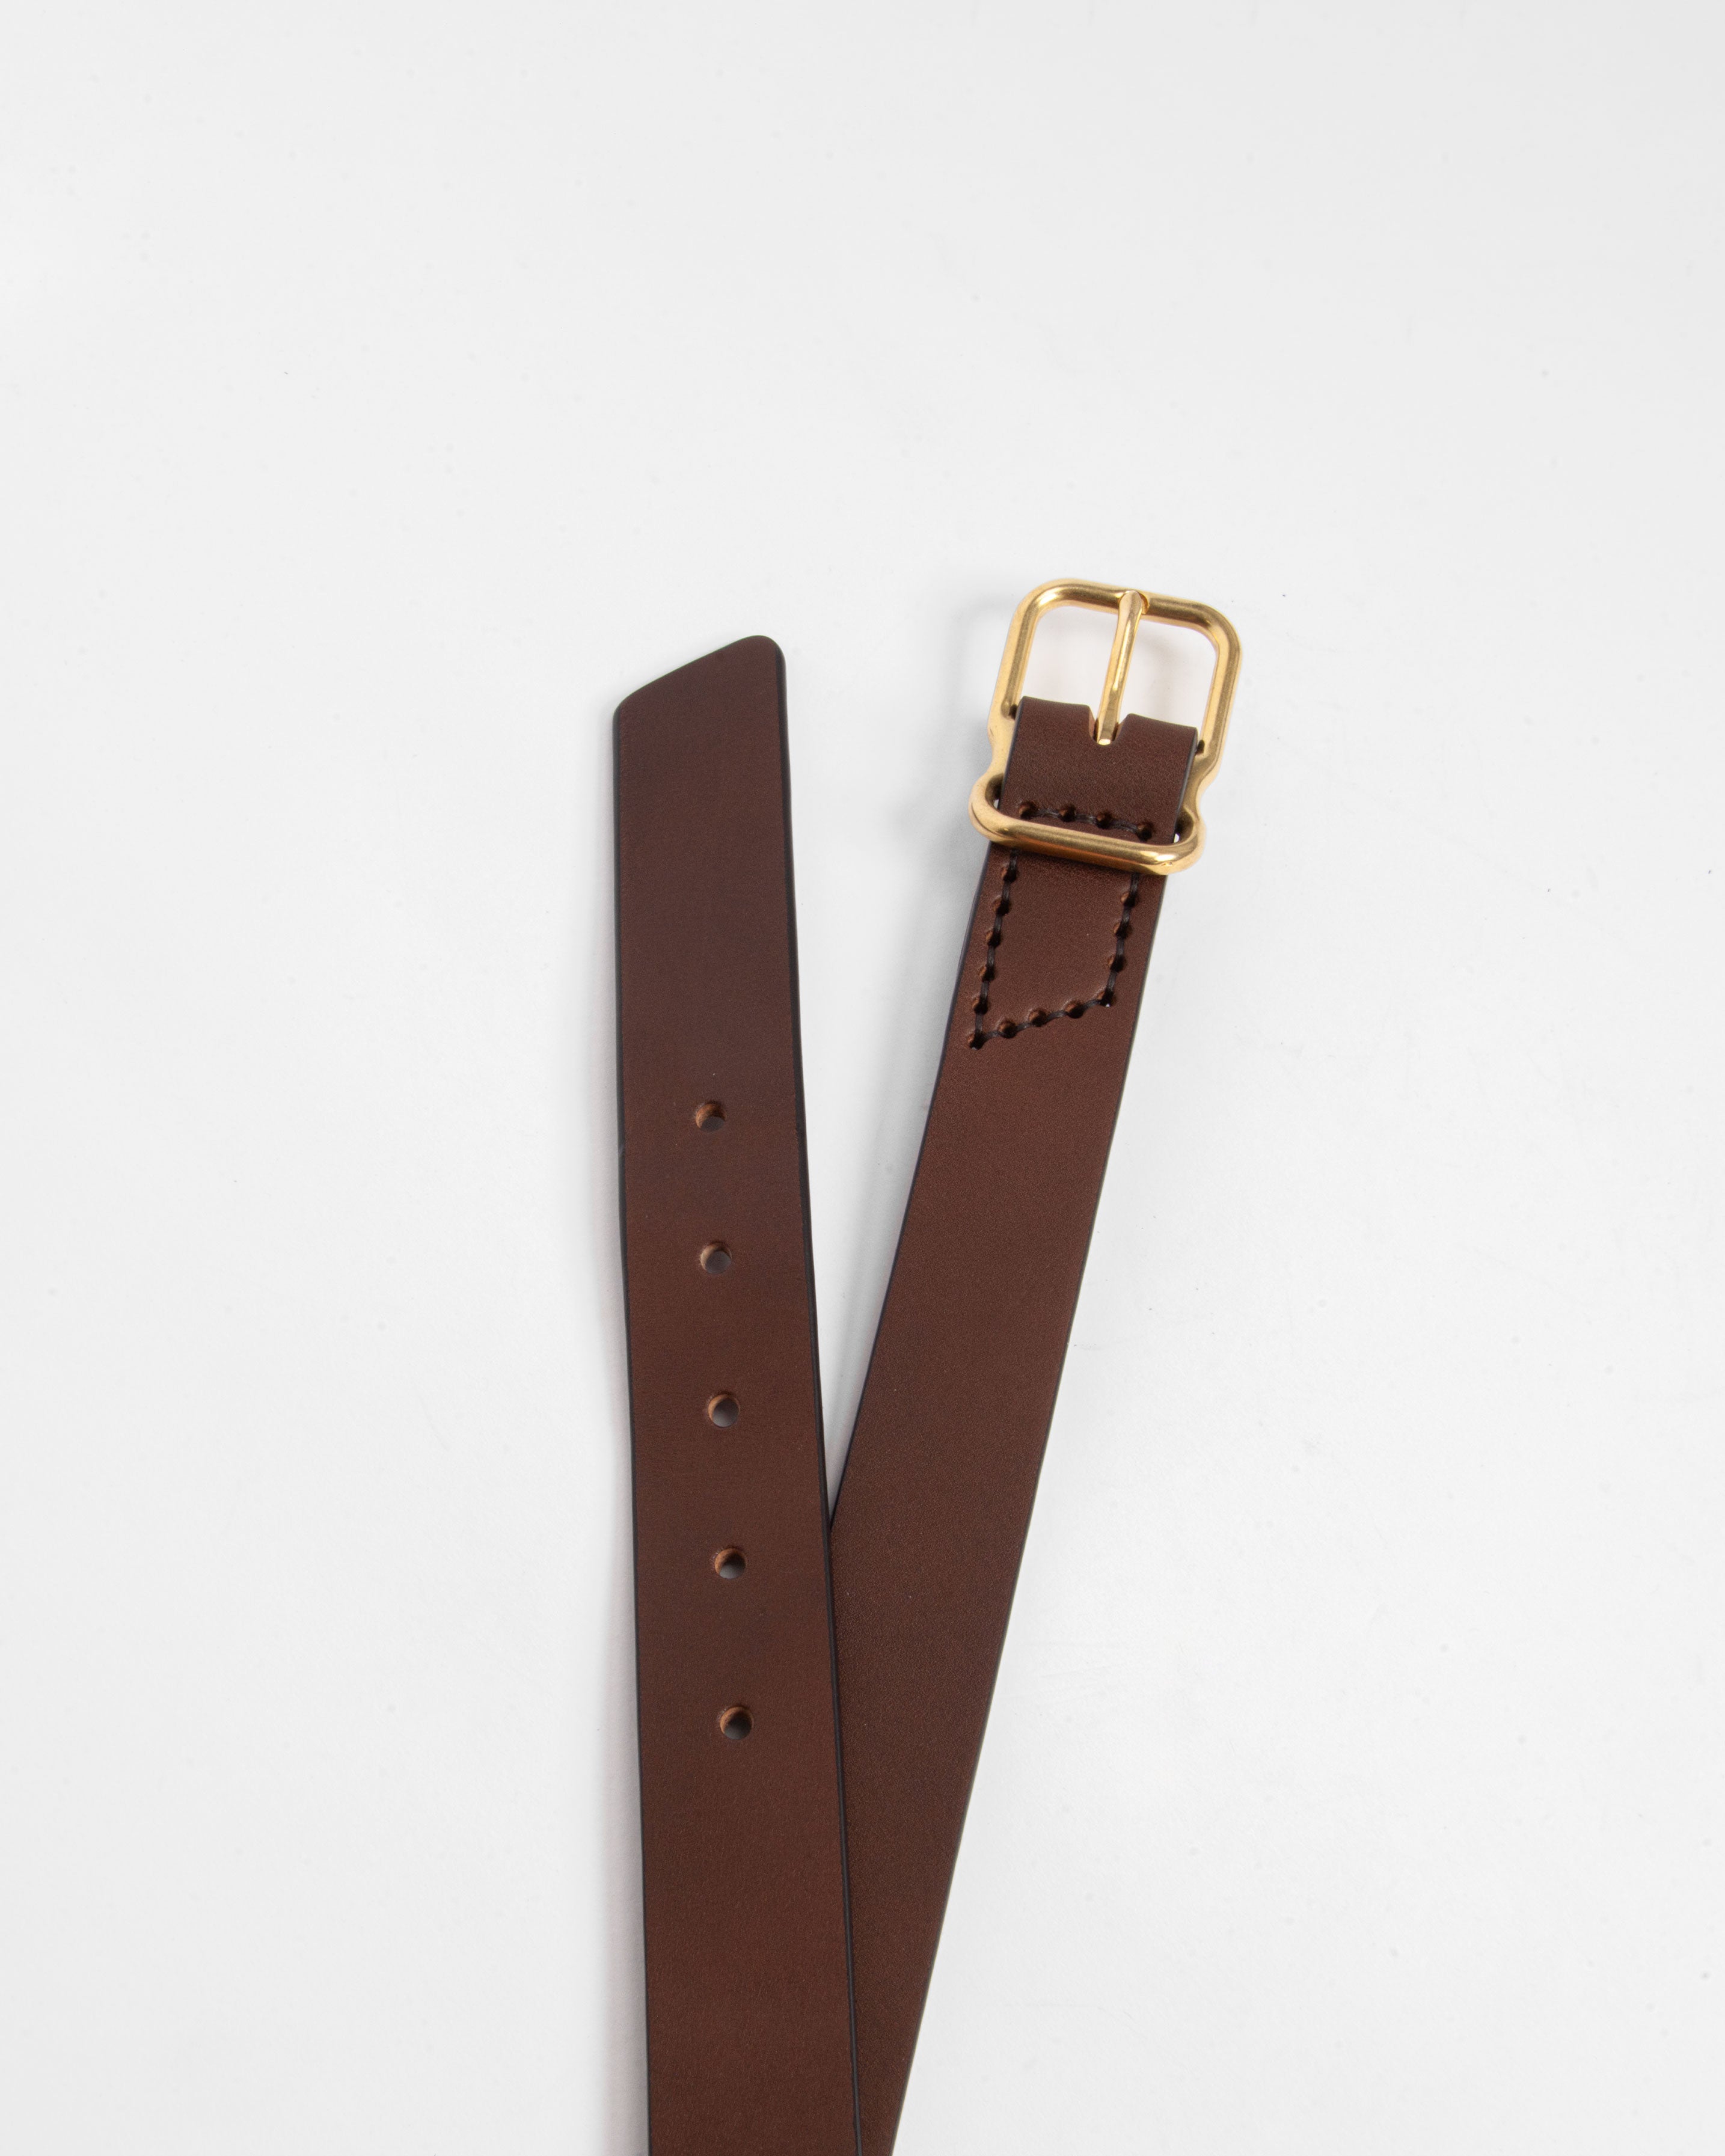 118 Signature Leather Belt - Narrow - Walnut - Brass